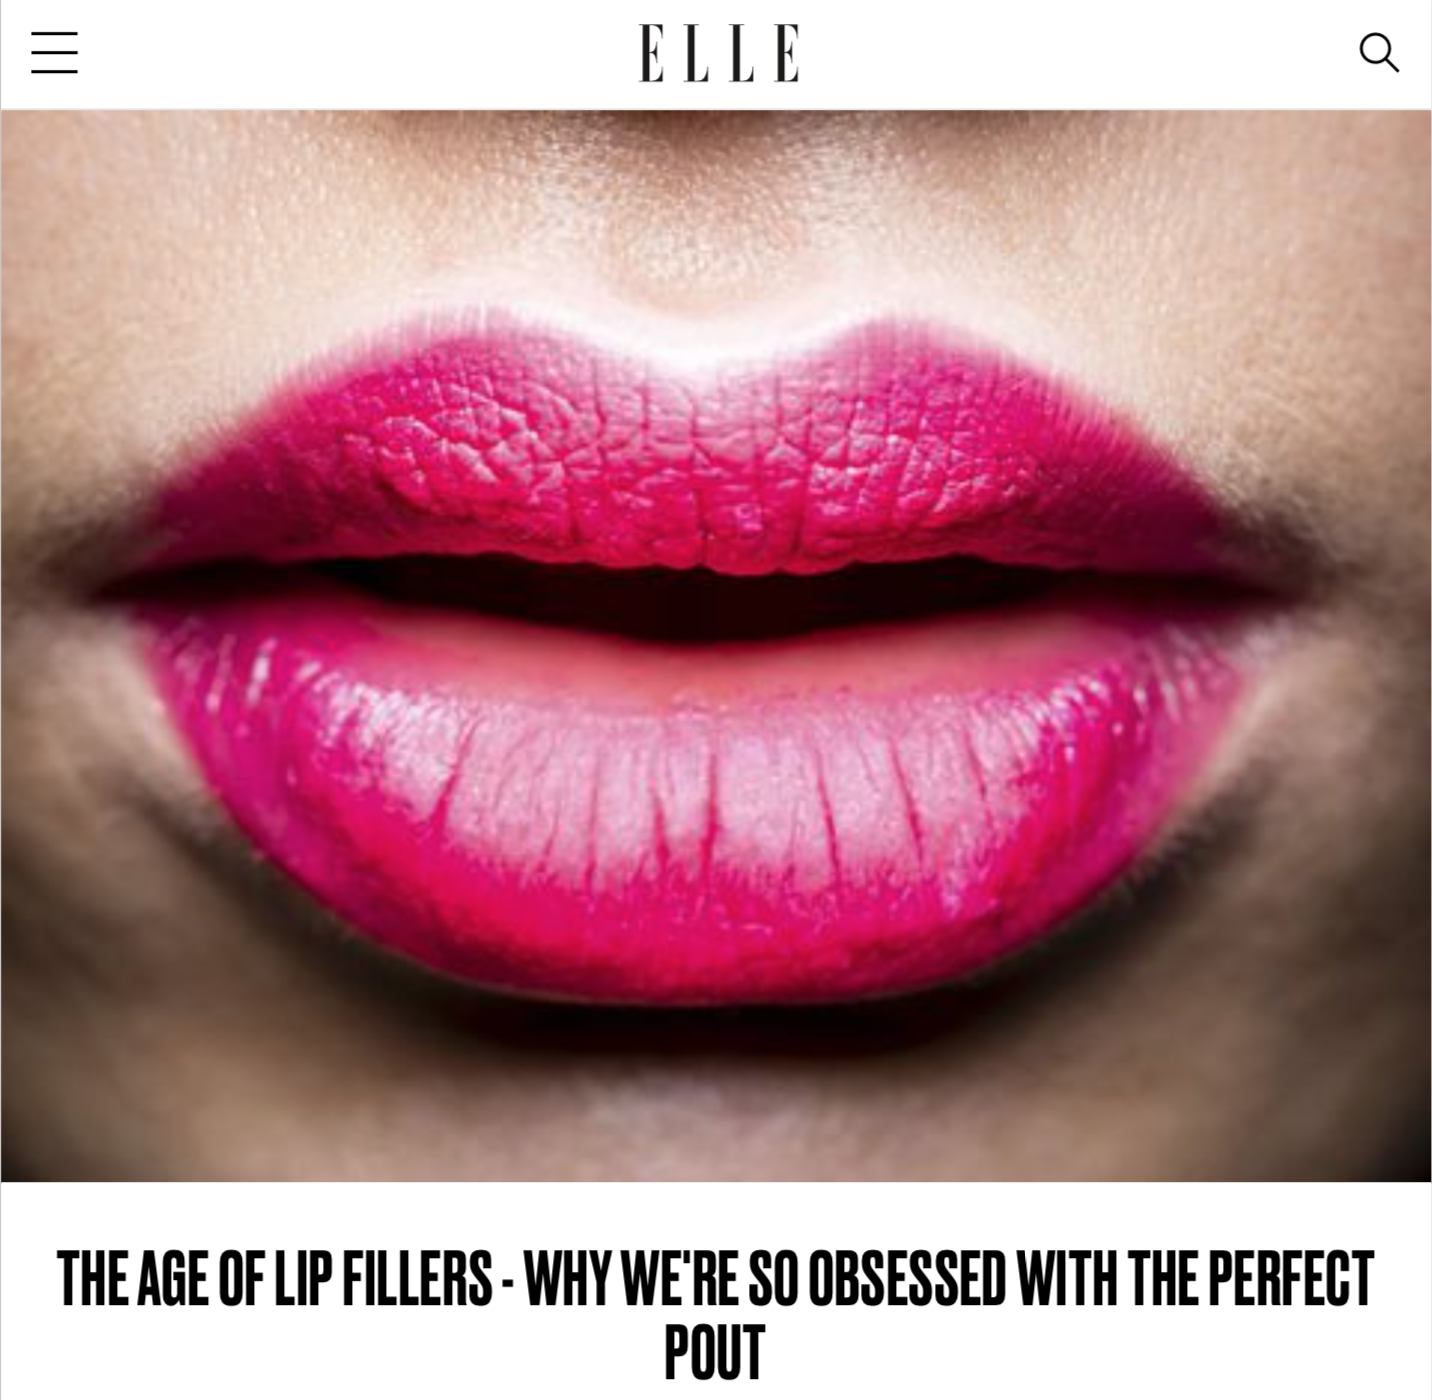 Elle magazine UK Lip filler and lip augmentation article by Joely Walker 